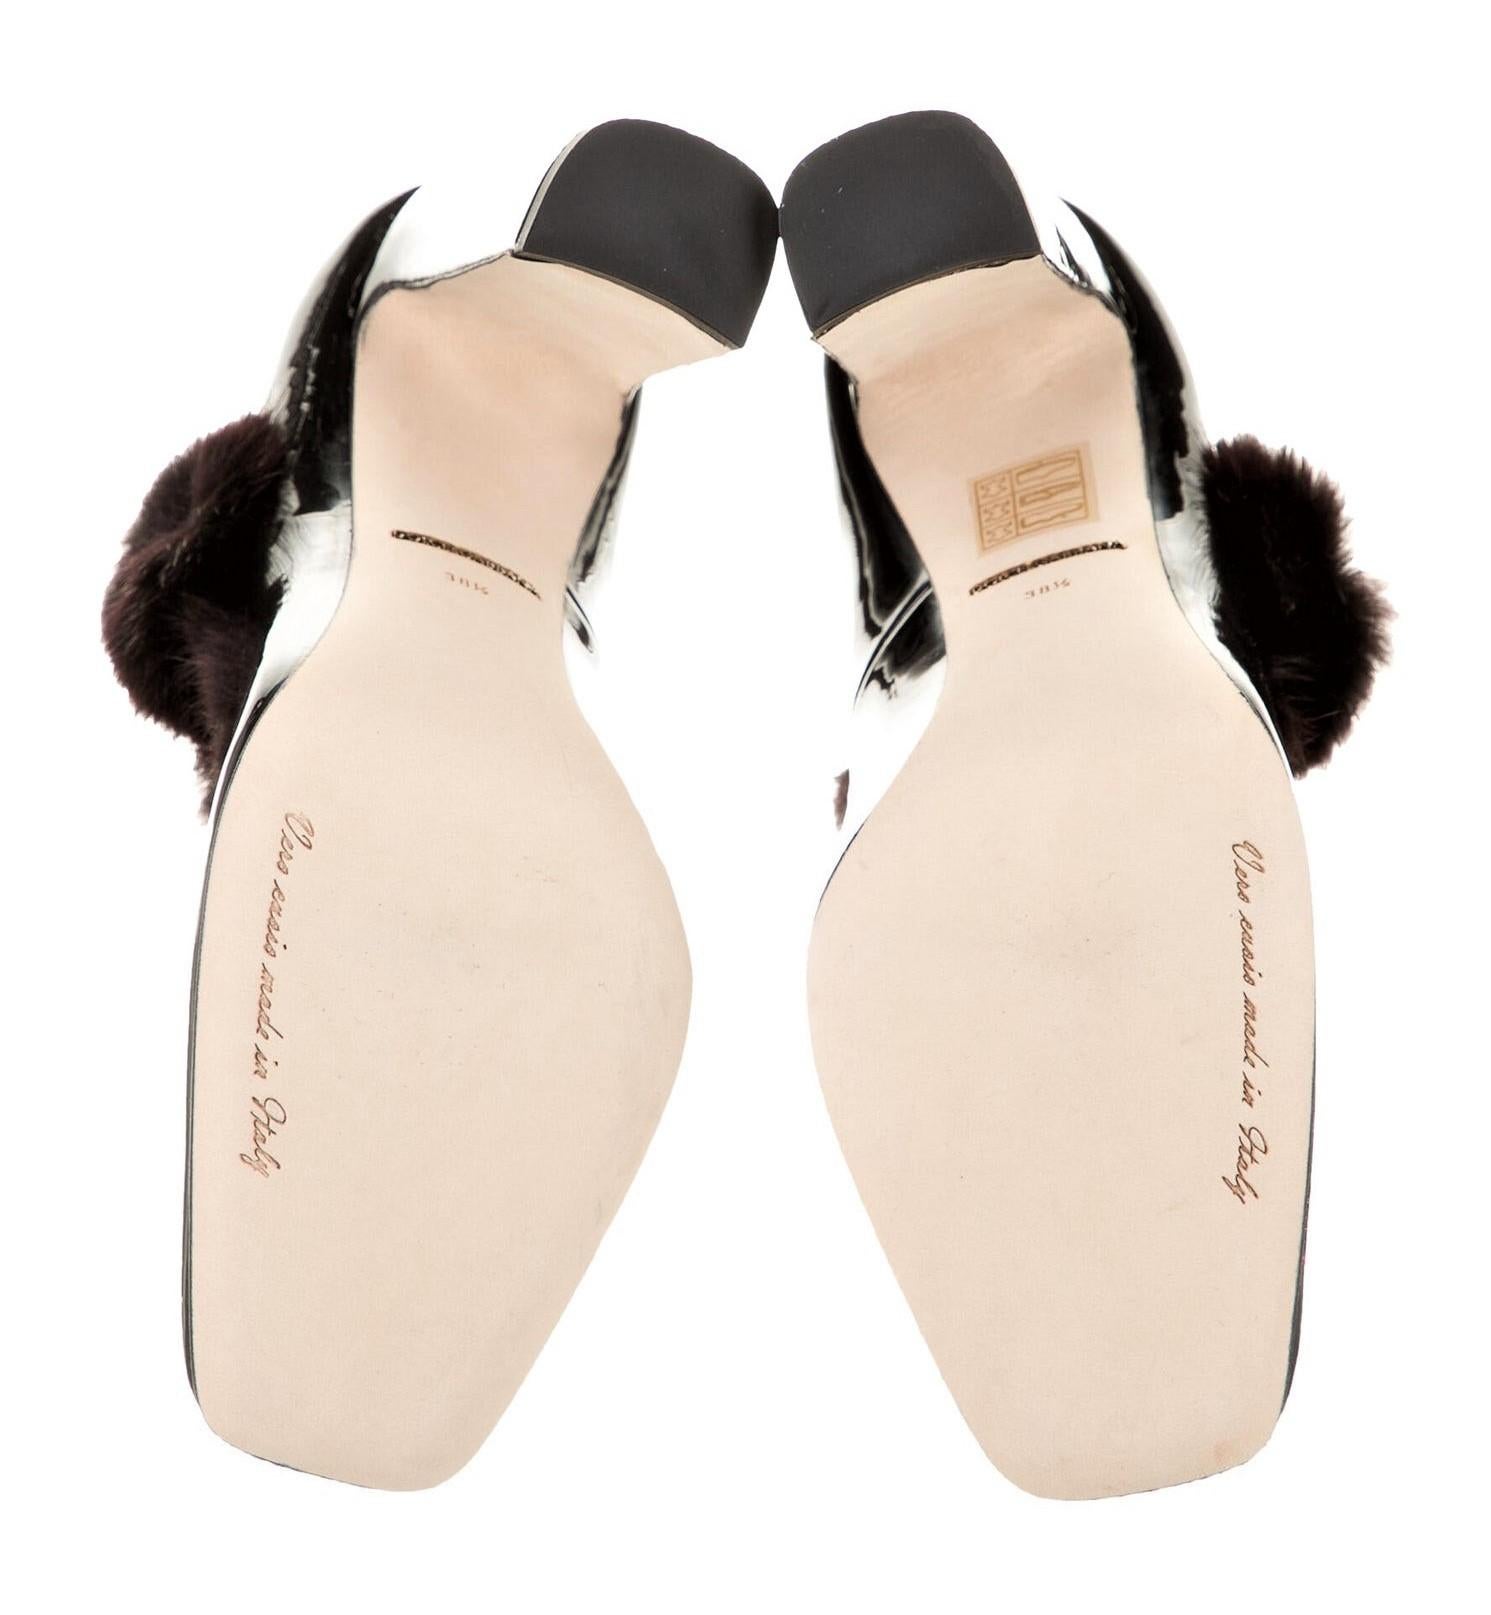 New Dolce & Gabbana Patent Leather Mink Pumps Heels Fall 2016 Sz 38.5 3